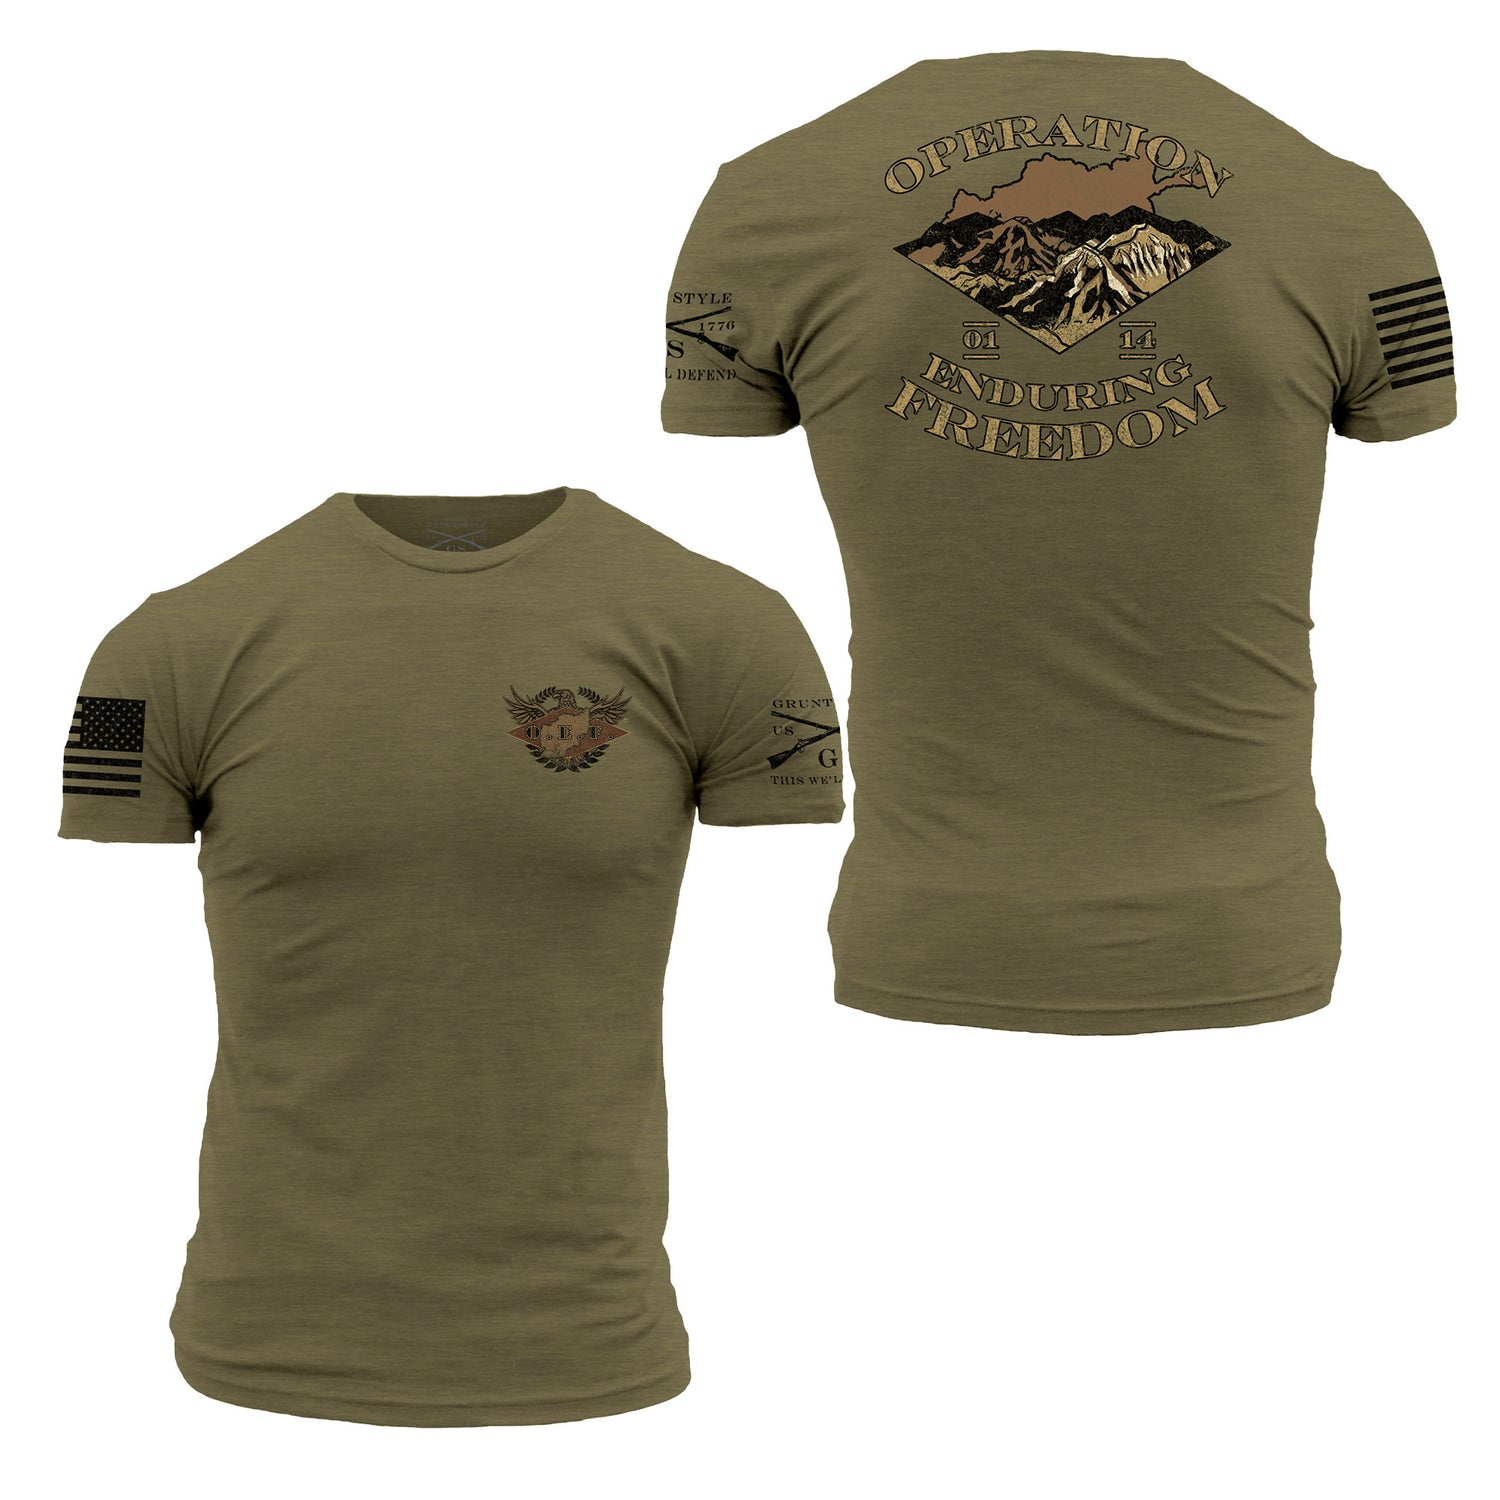 OEF Veteran Military Shirts 